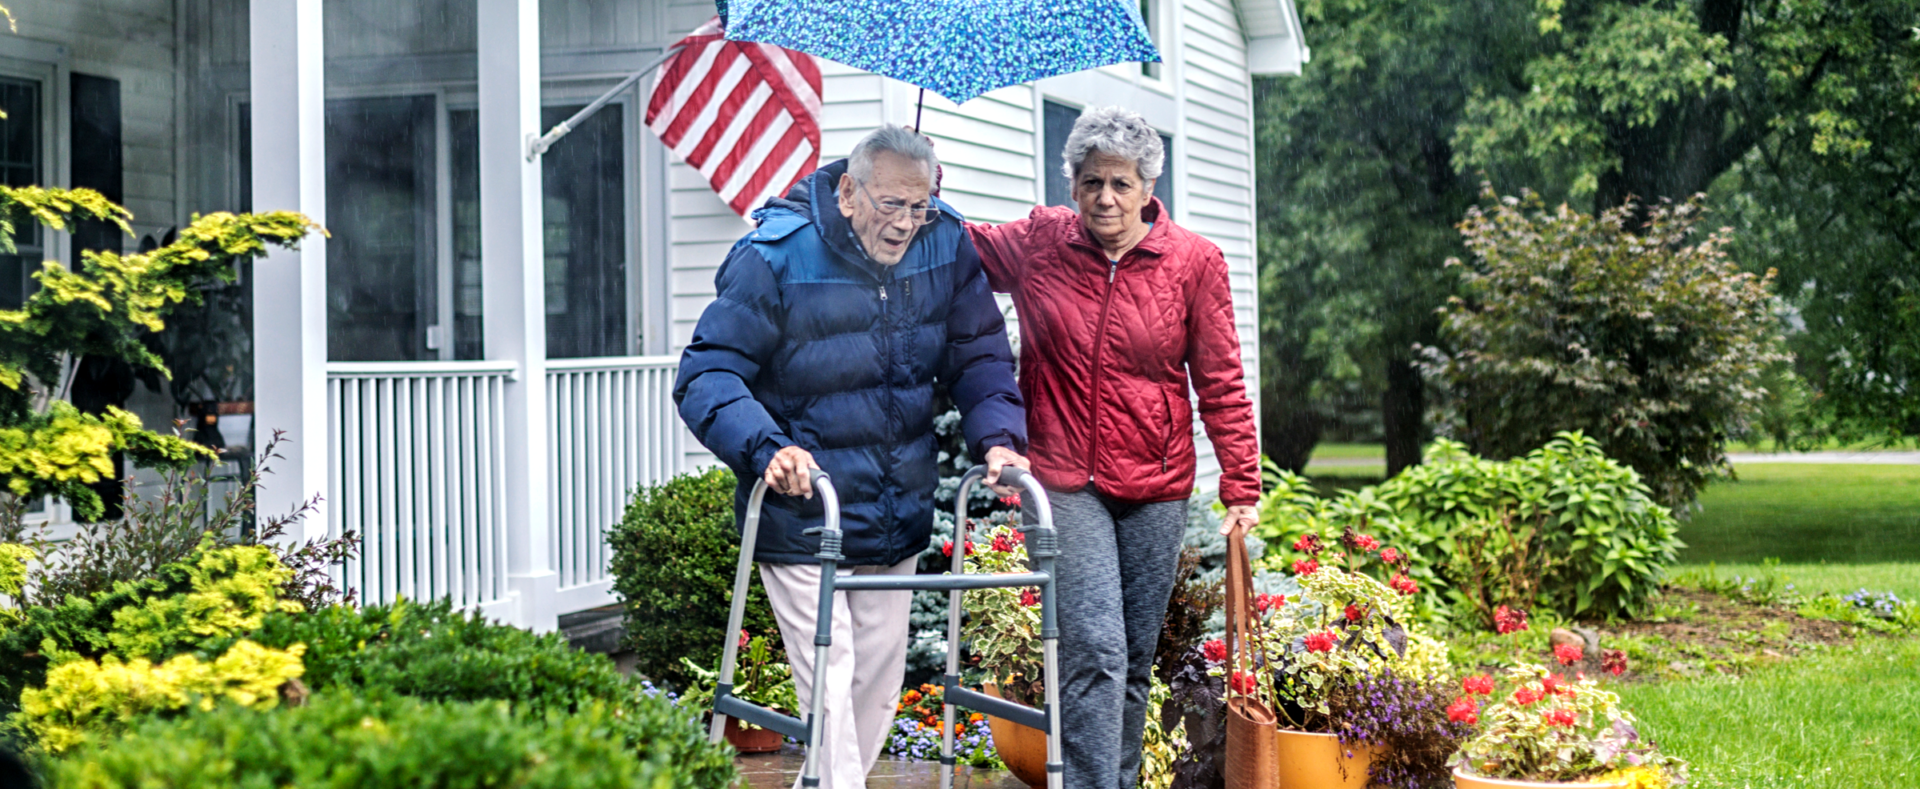 Woman helping older man walk in the rain